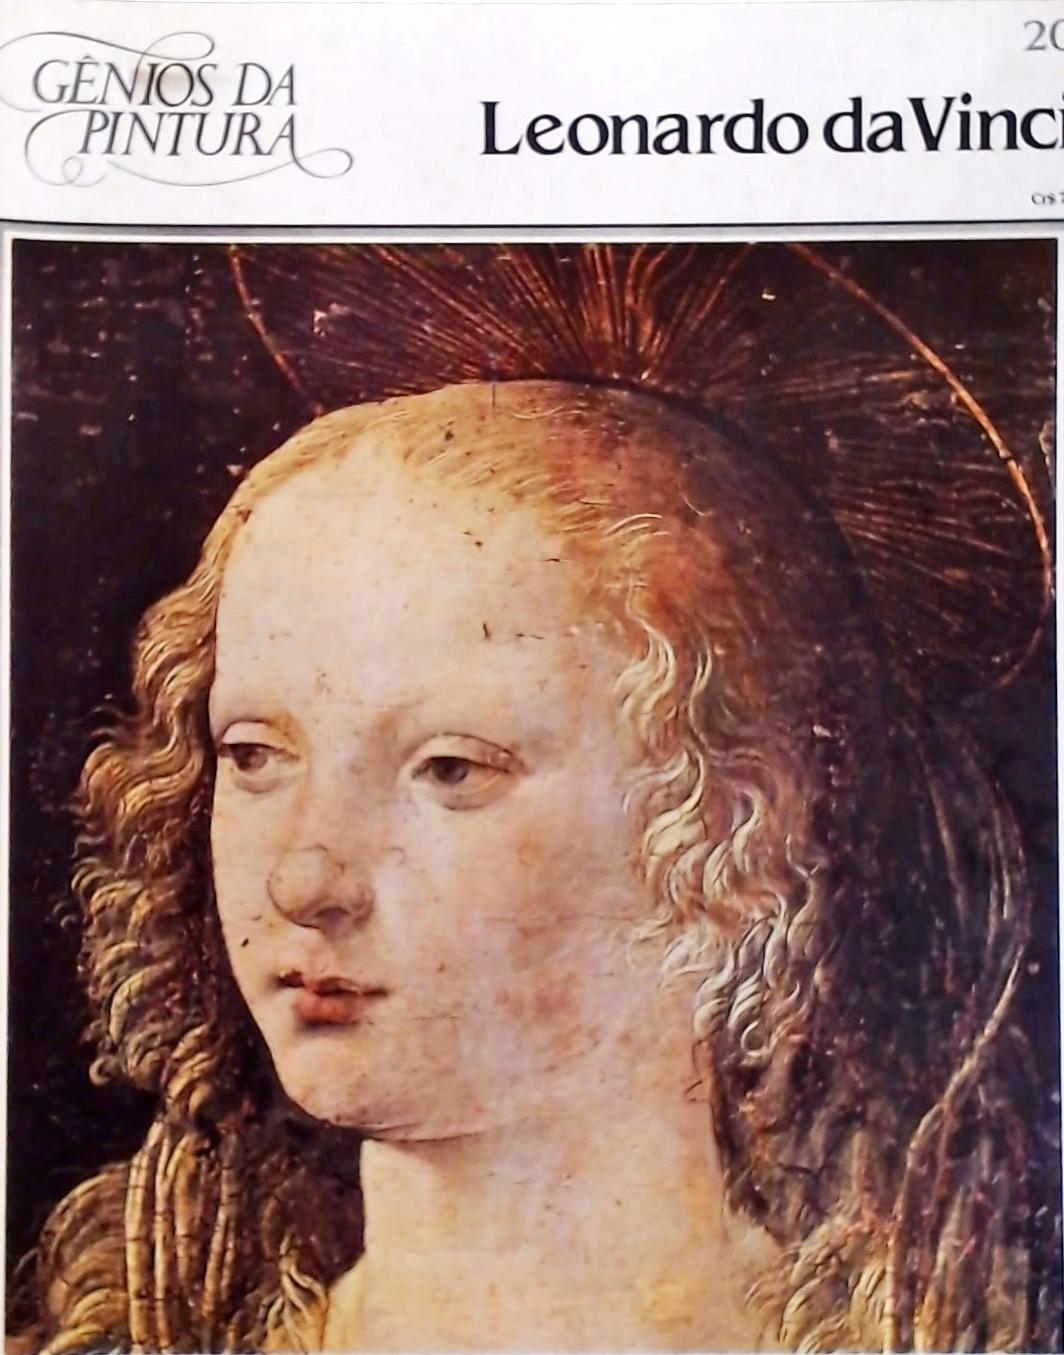 Gênios da Pintura - Leonardo da Vinci